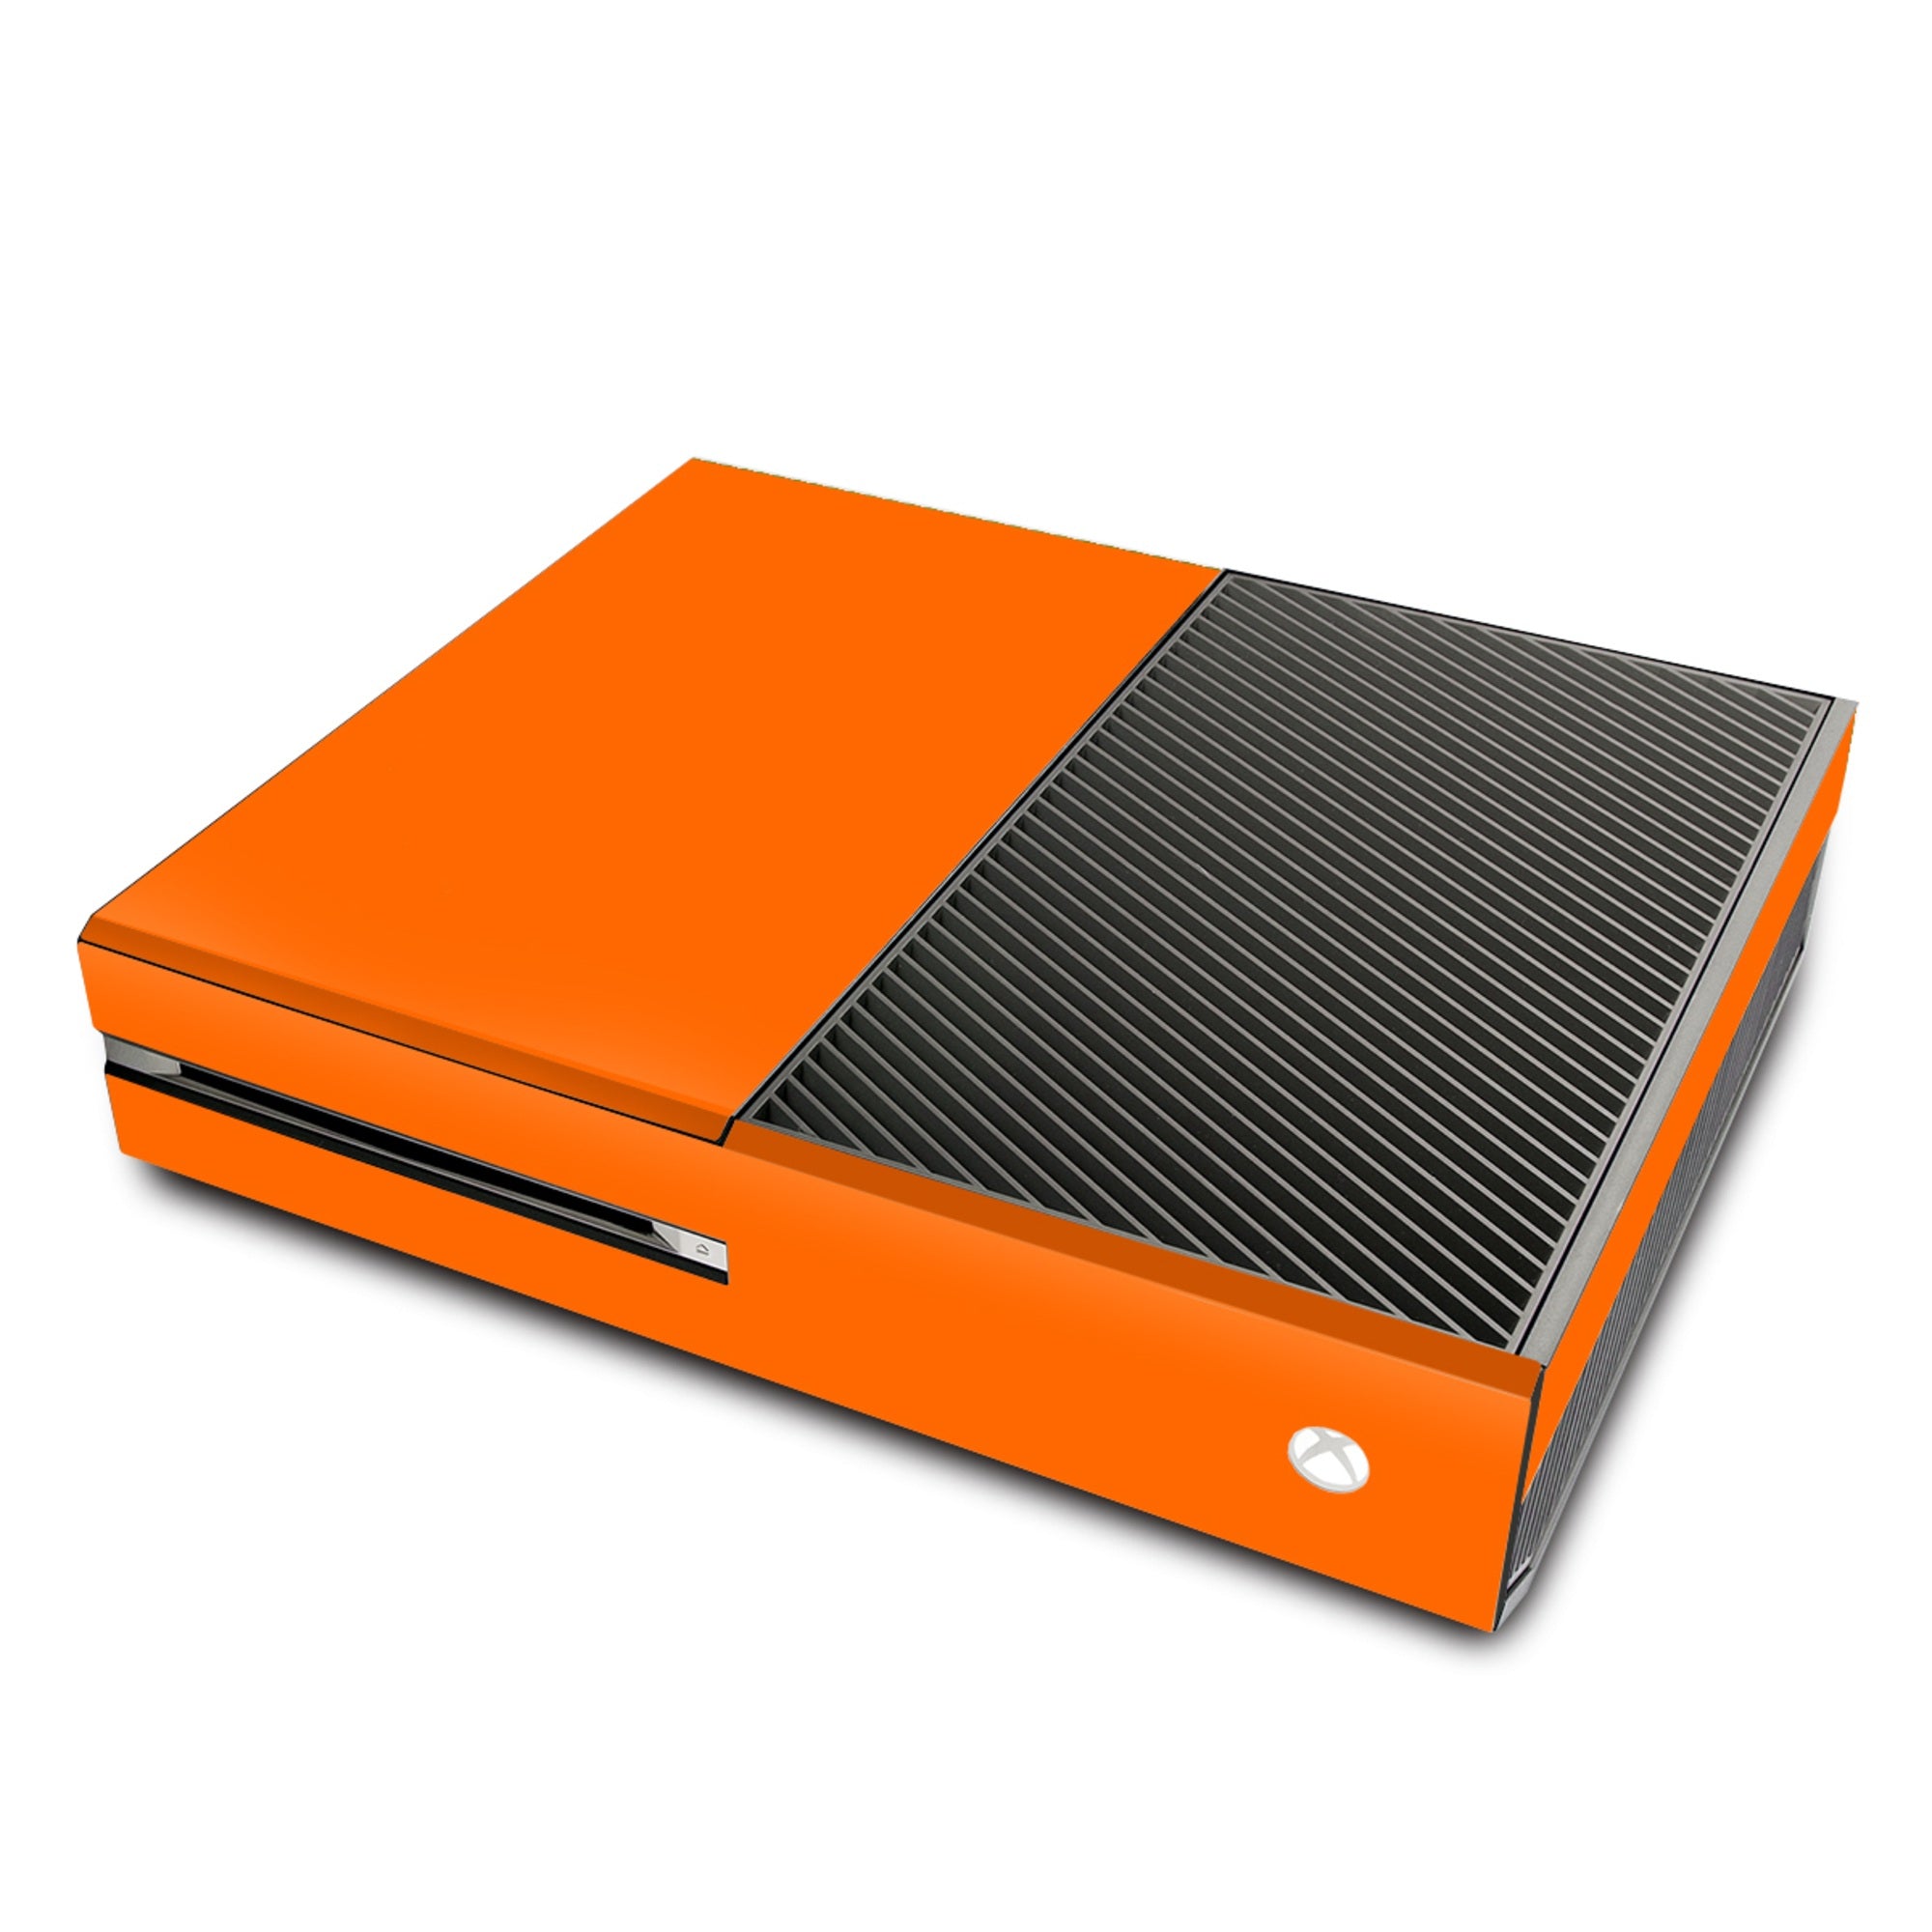 Solid State Pumpkin - Microsoft Xbox One Skin